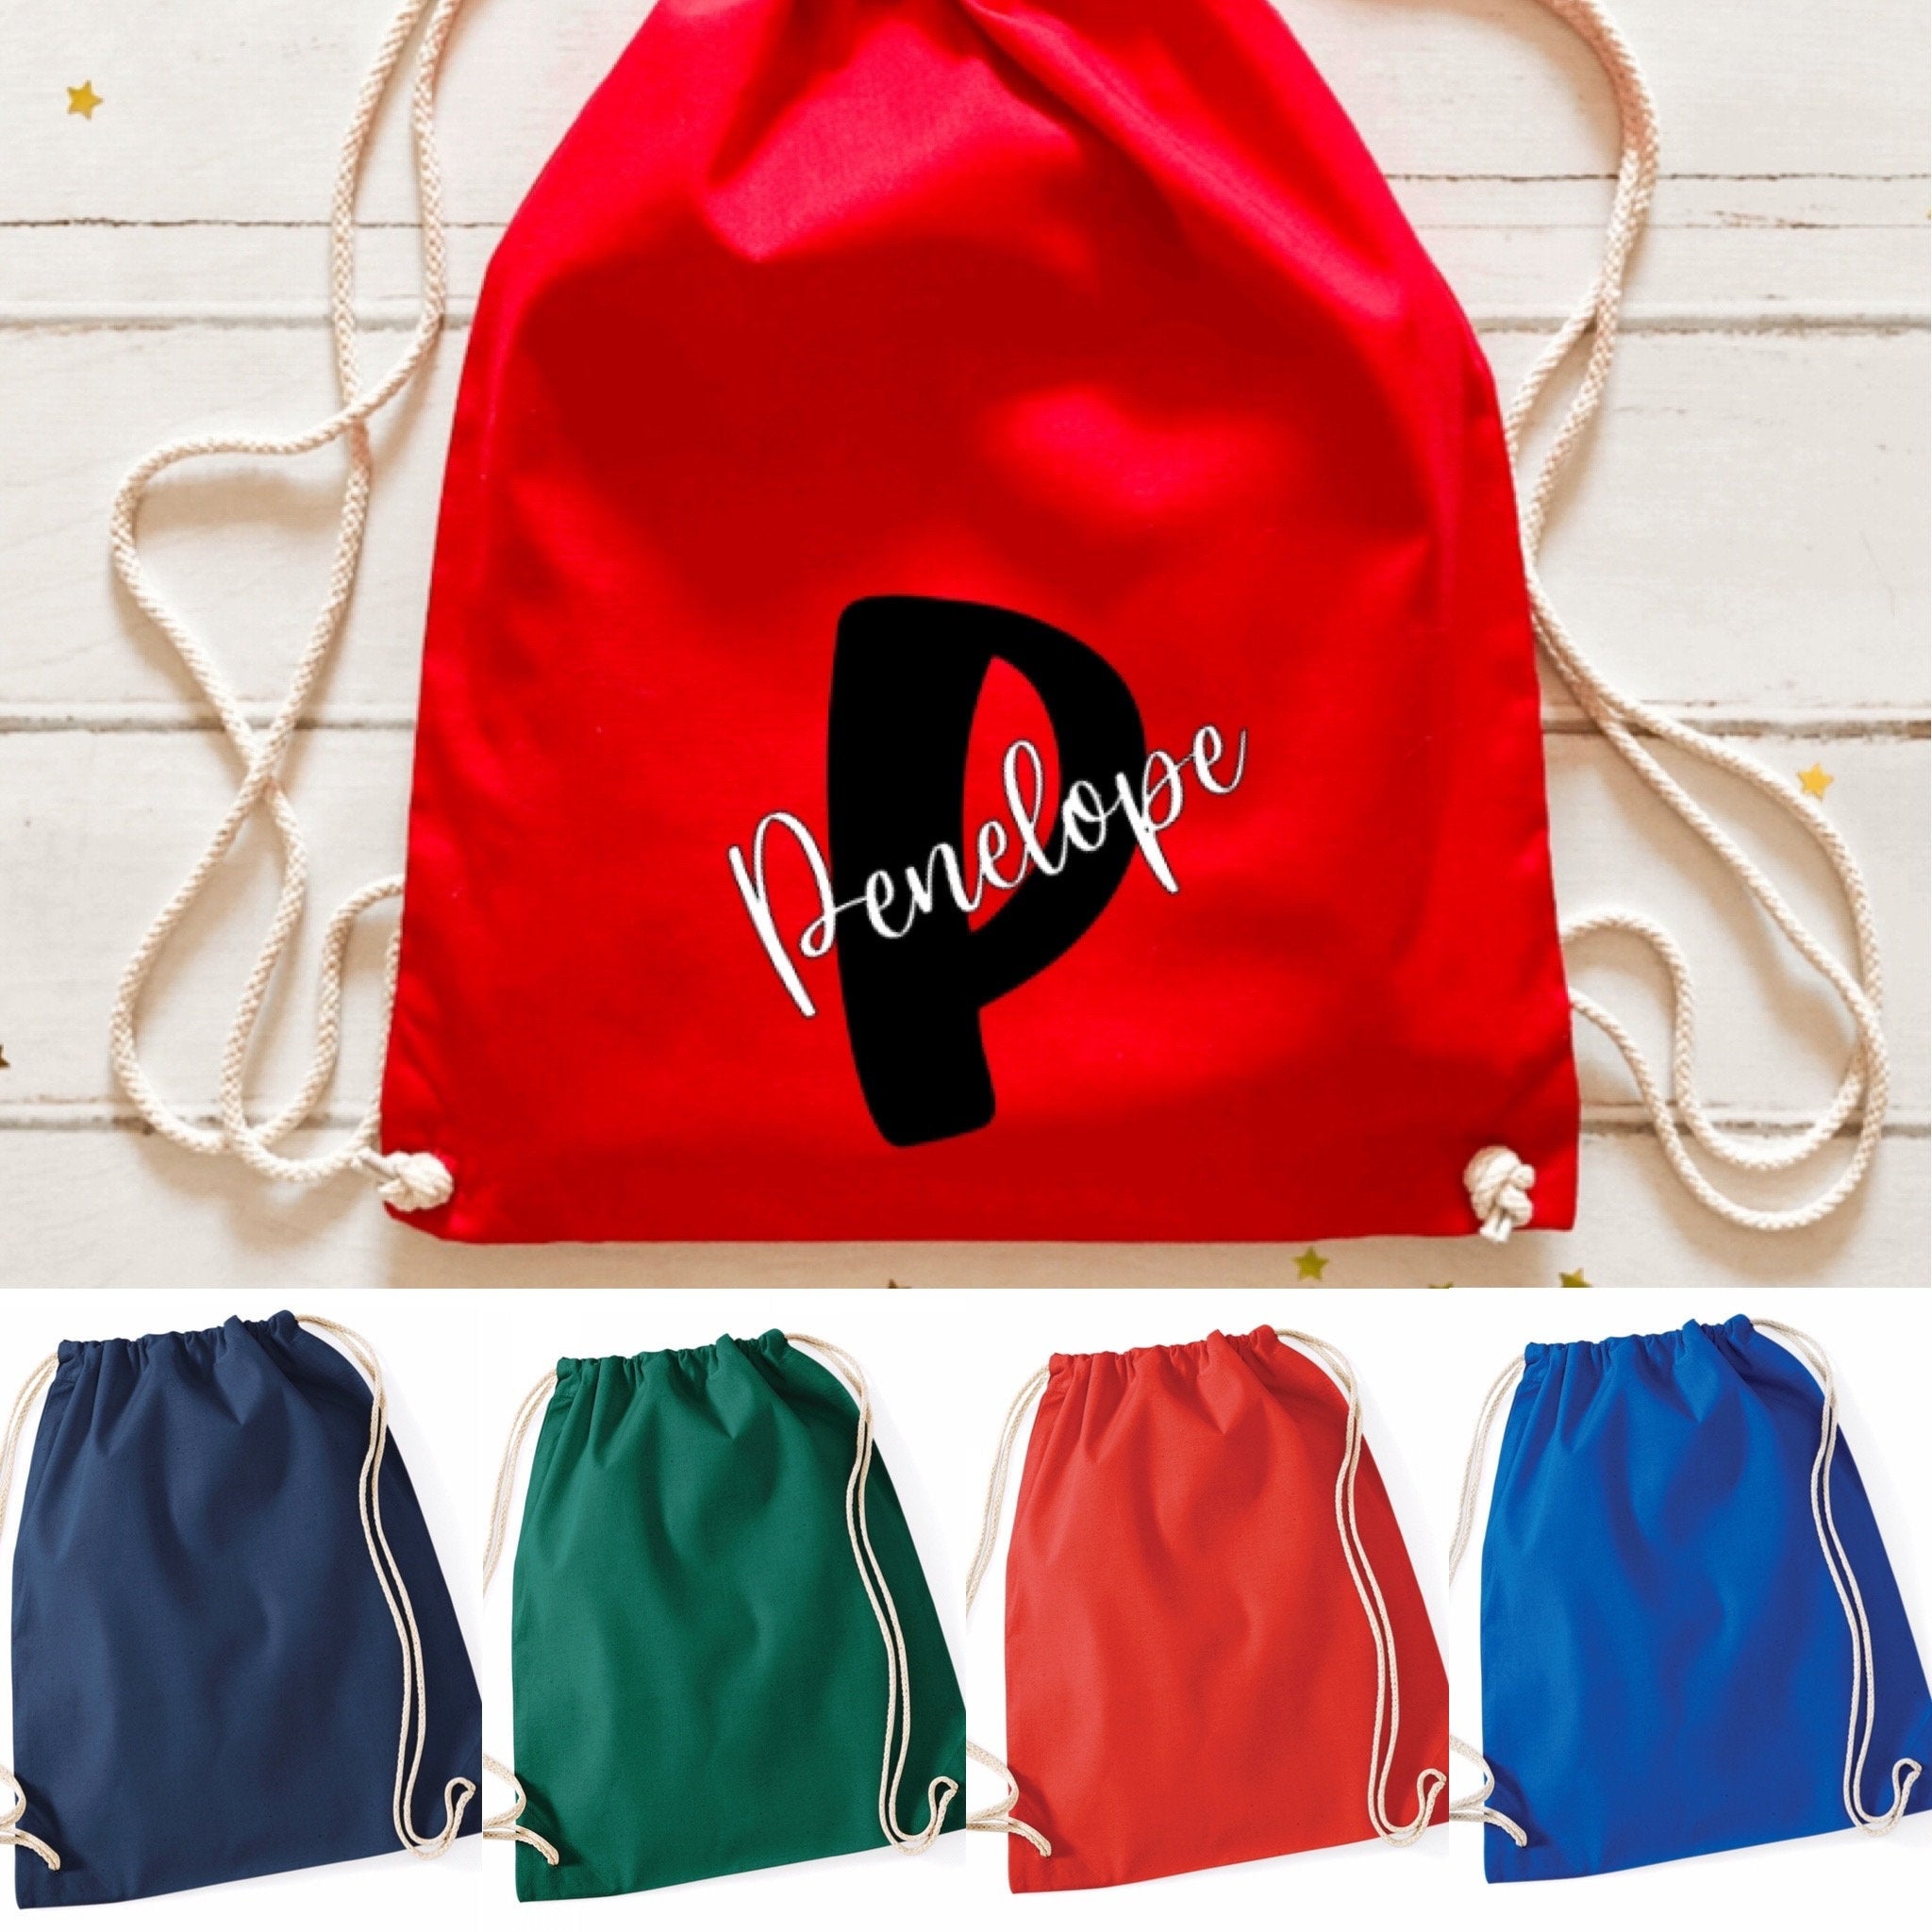 Personalised cotton school PE bag